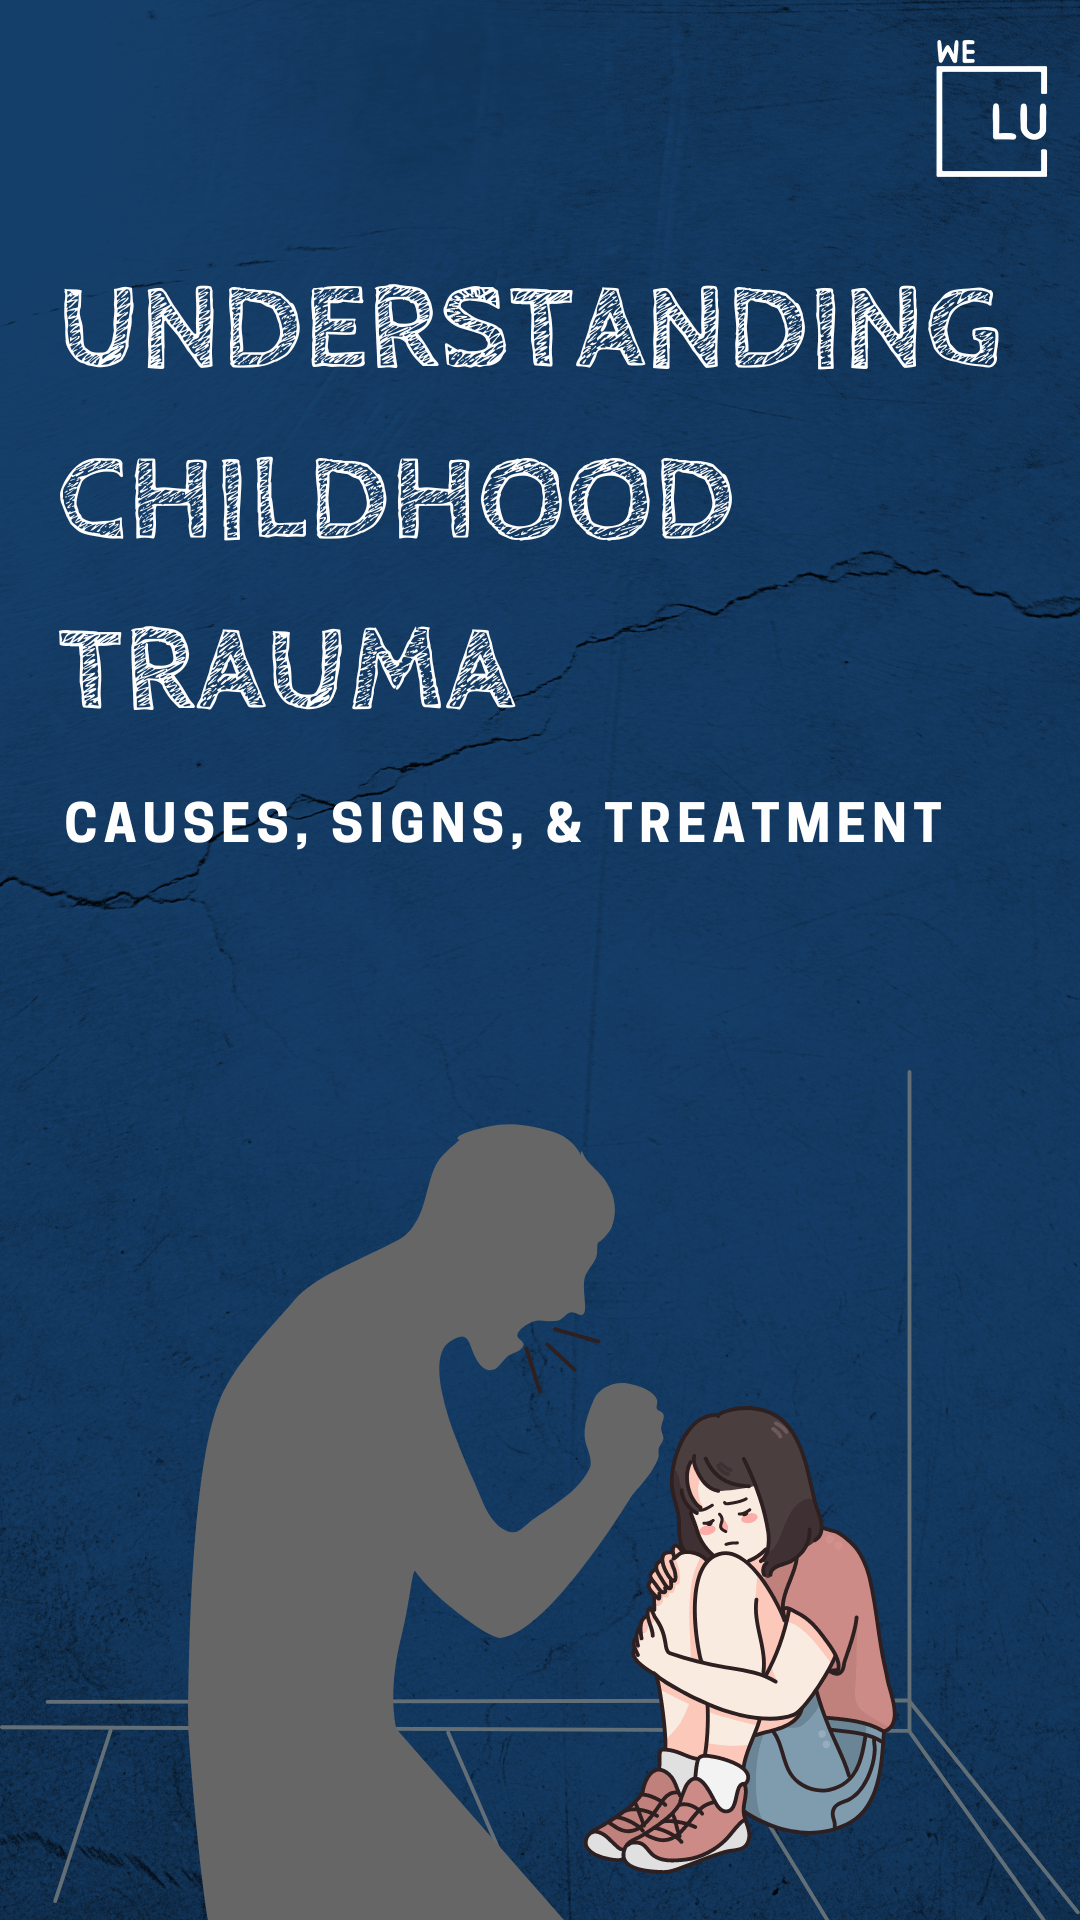 Trauma Treatment: What Is It? Symptoms & Types